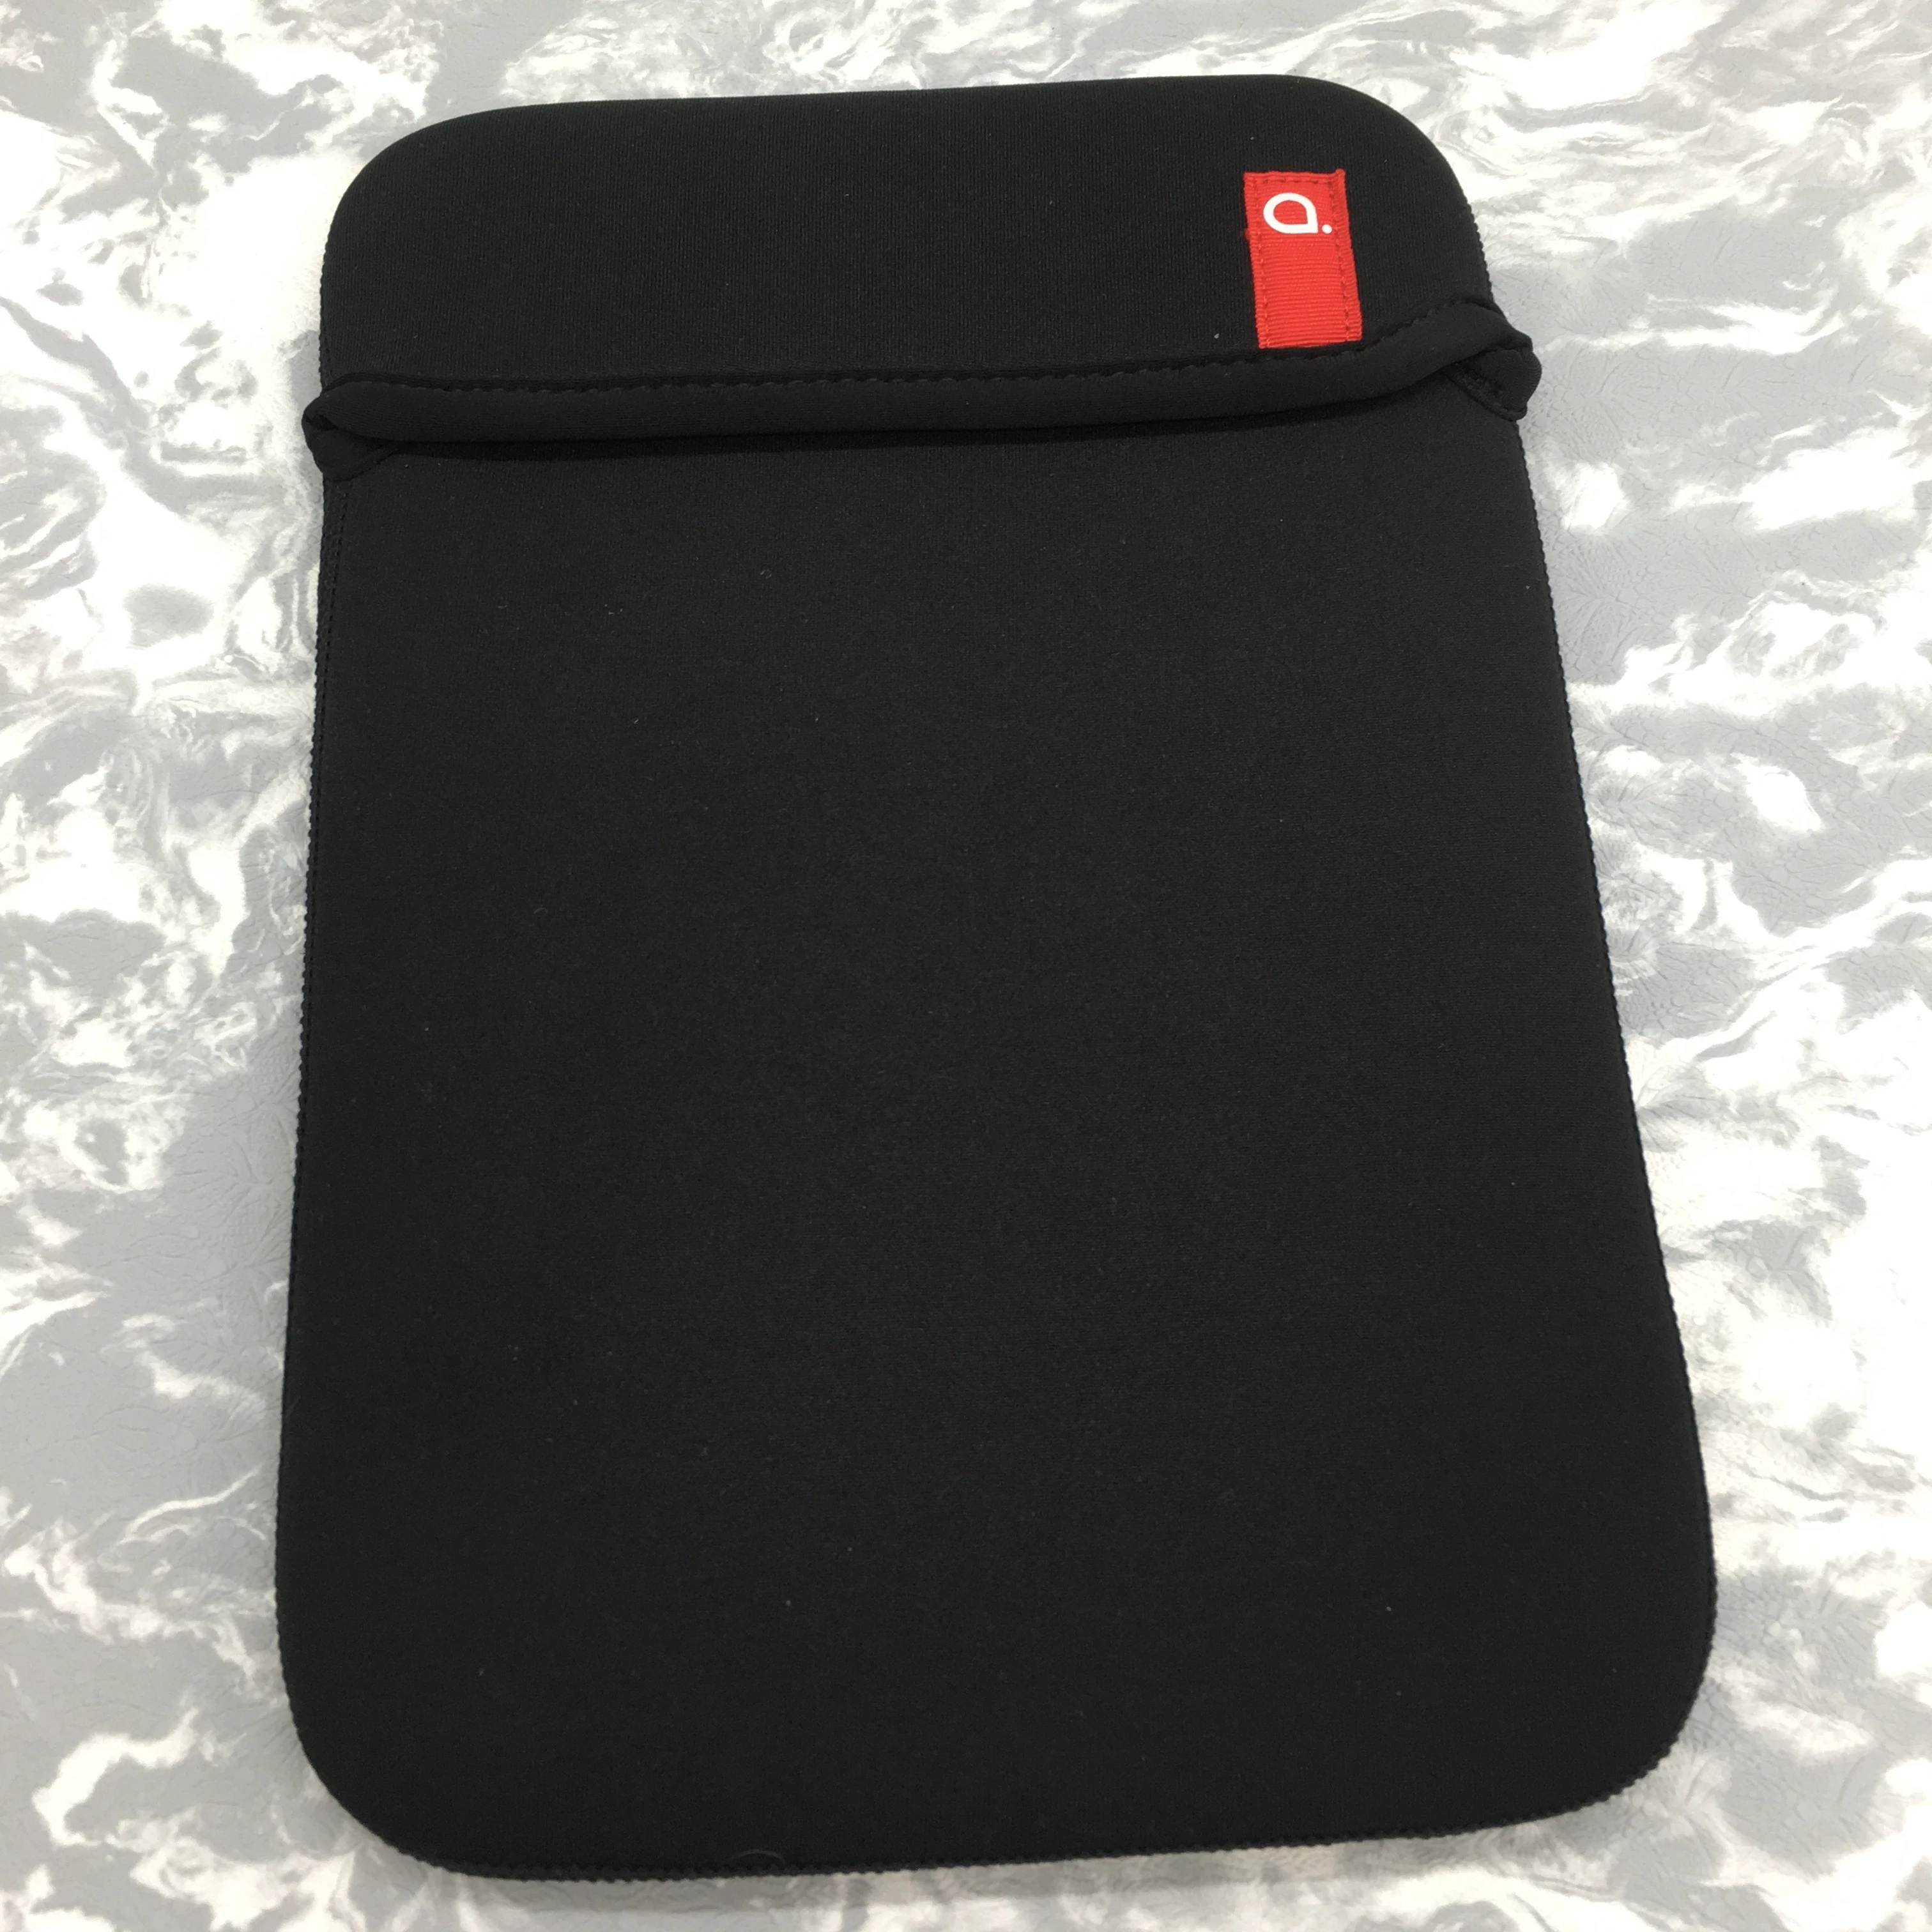 Neoprene Laptop Bags and Computer Bags Neoprene Sleeve Case for Phone Tablet Laptop